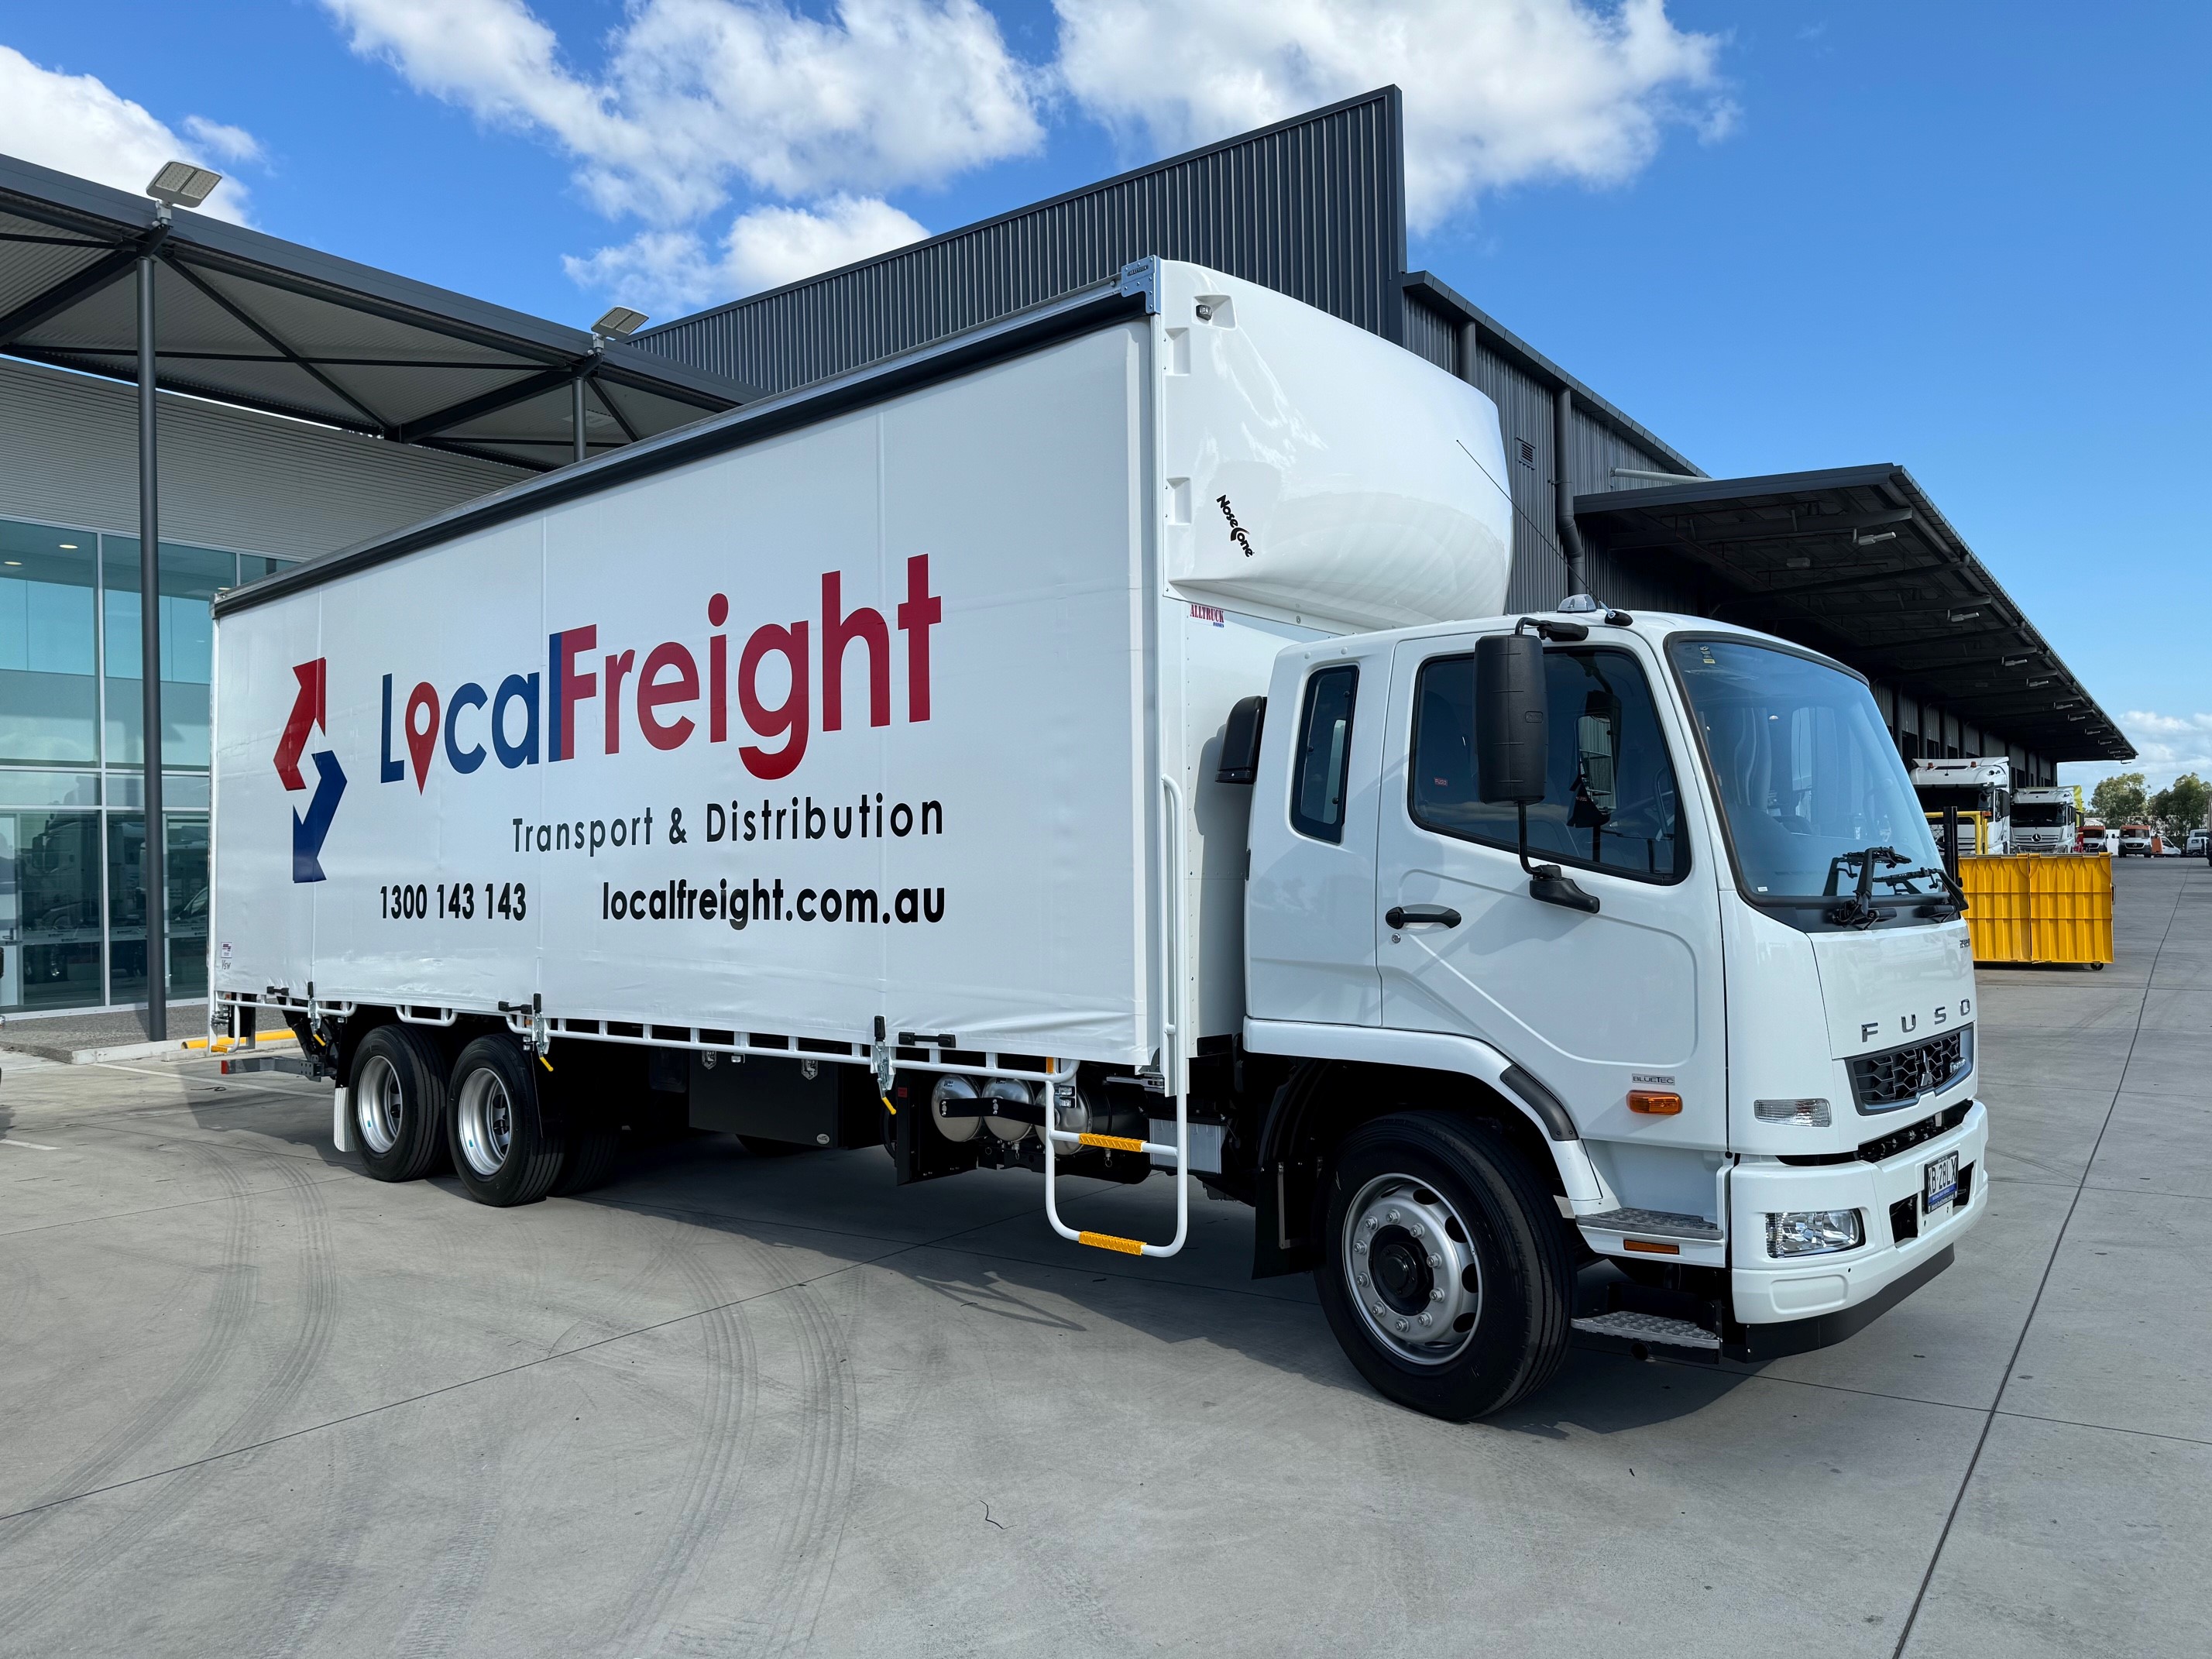 Simon from Daimler Trucks Brisbane delivering the FUSO goods.